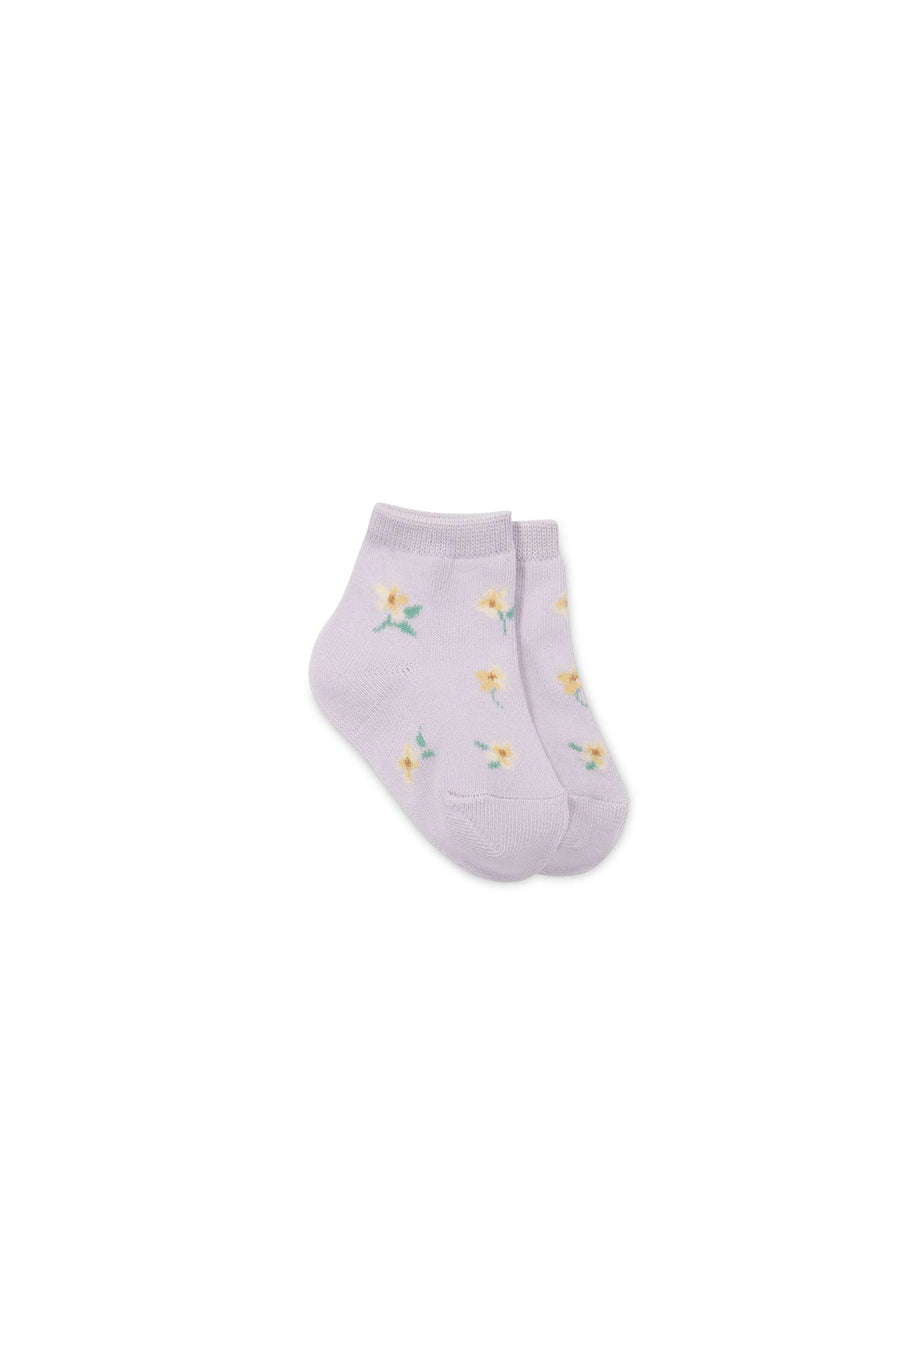 Harlow Sock - Simple Flowers Lilac Childrens Sock from Jamie Kay NZ